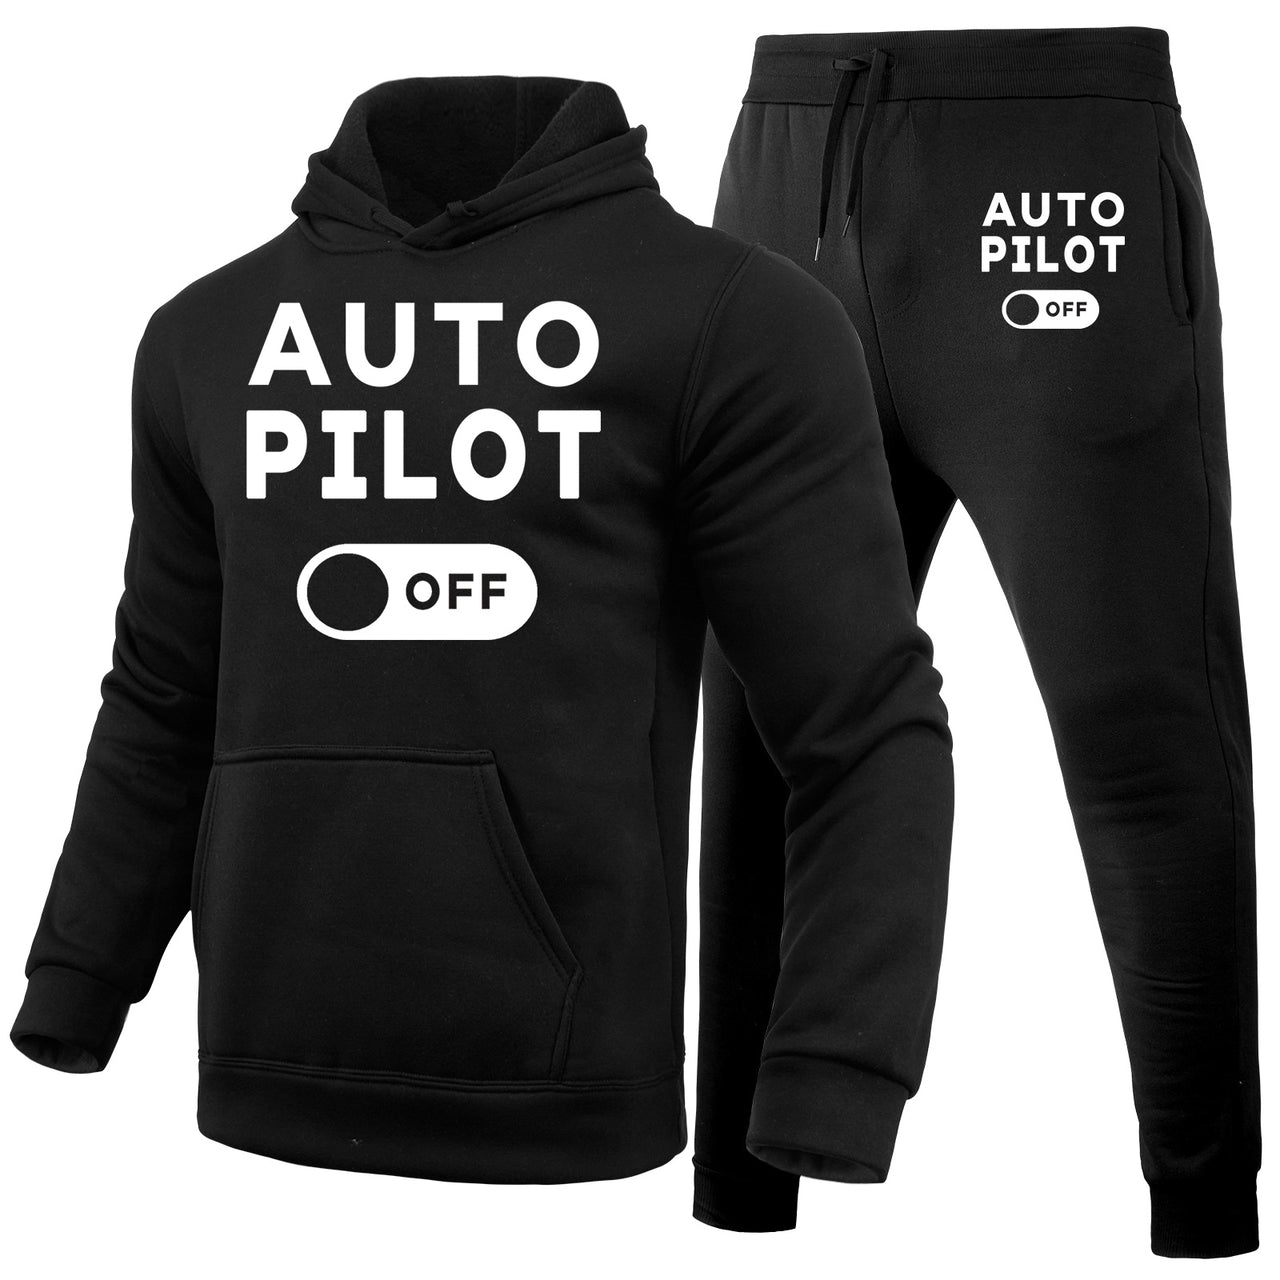 Auto Pilot Off Designed Hoodies & Sweatpants Set